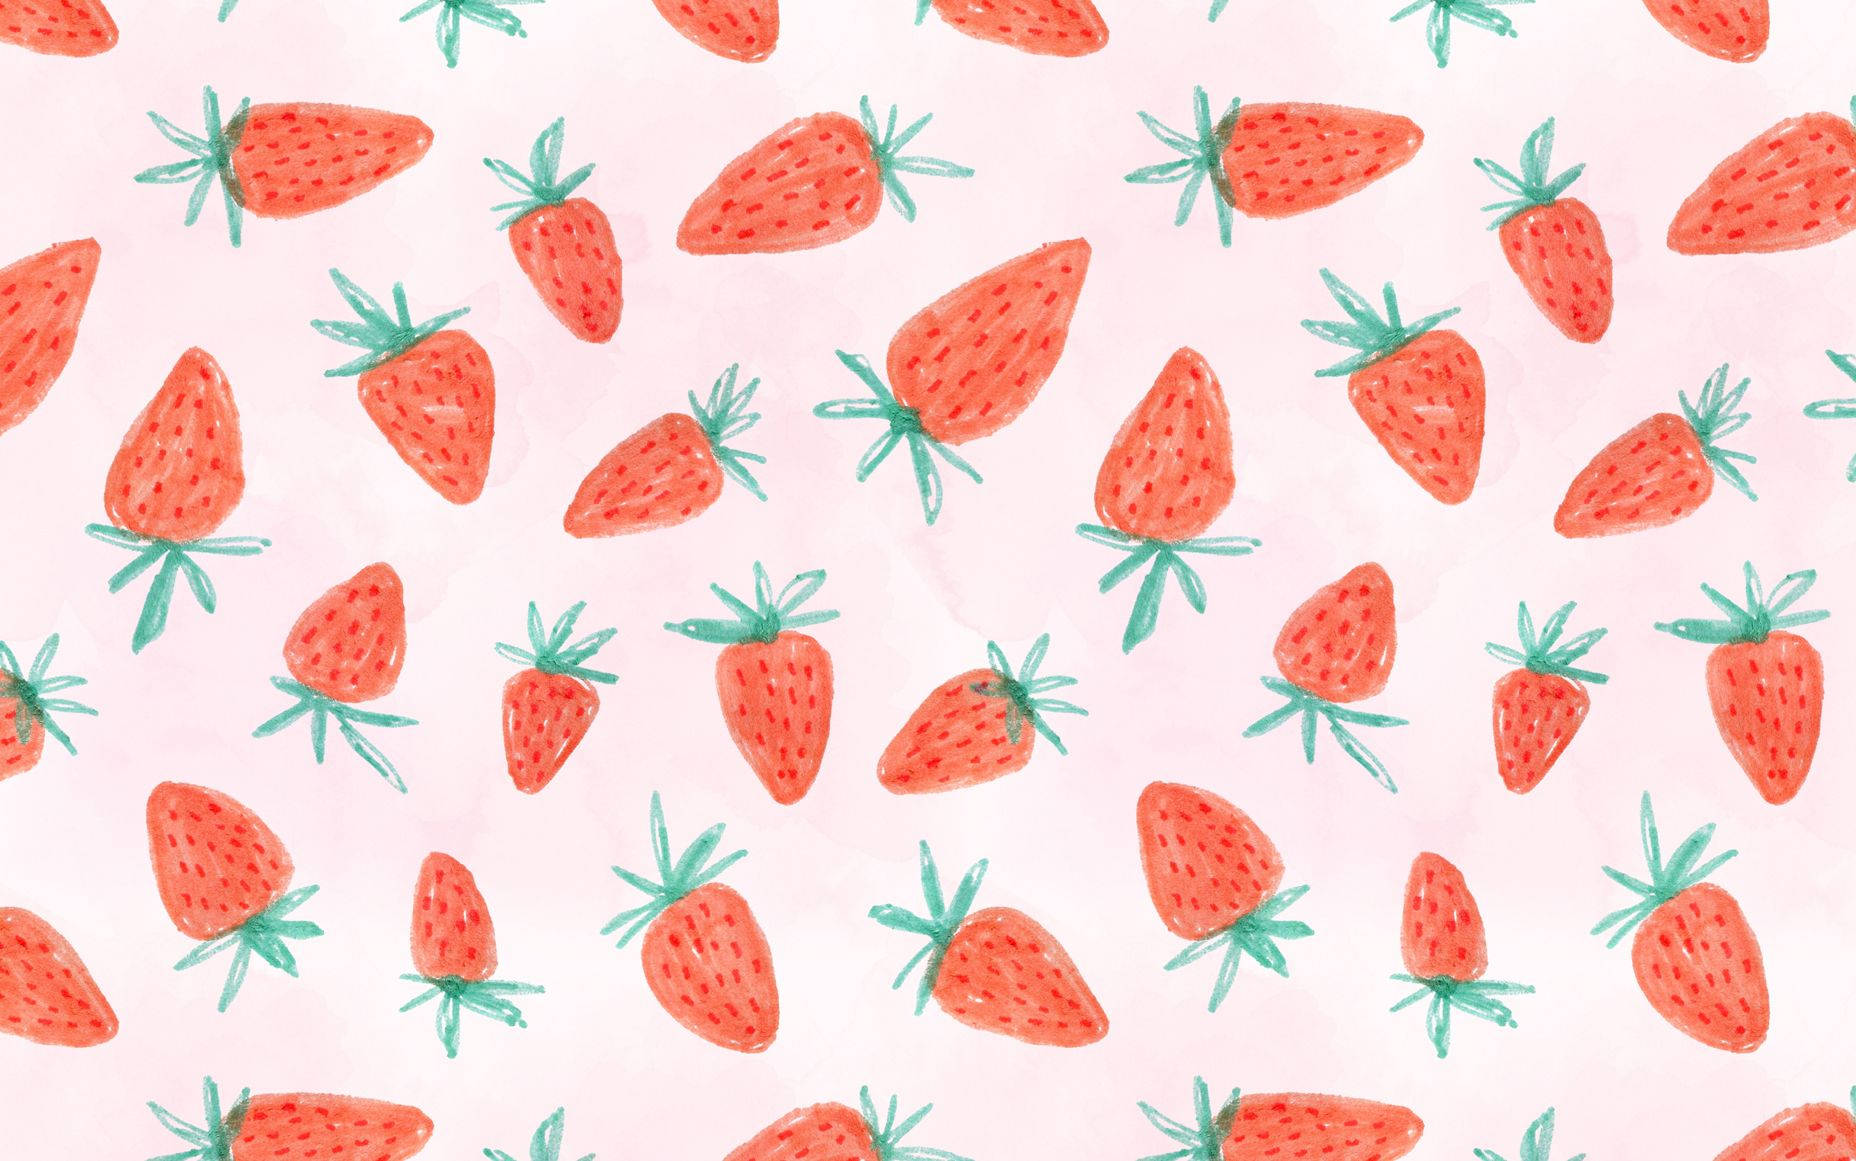 Strawberry Wallpaper Images  Free Download on Freepik